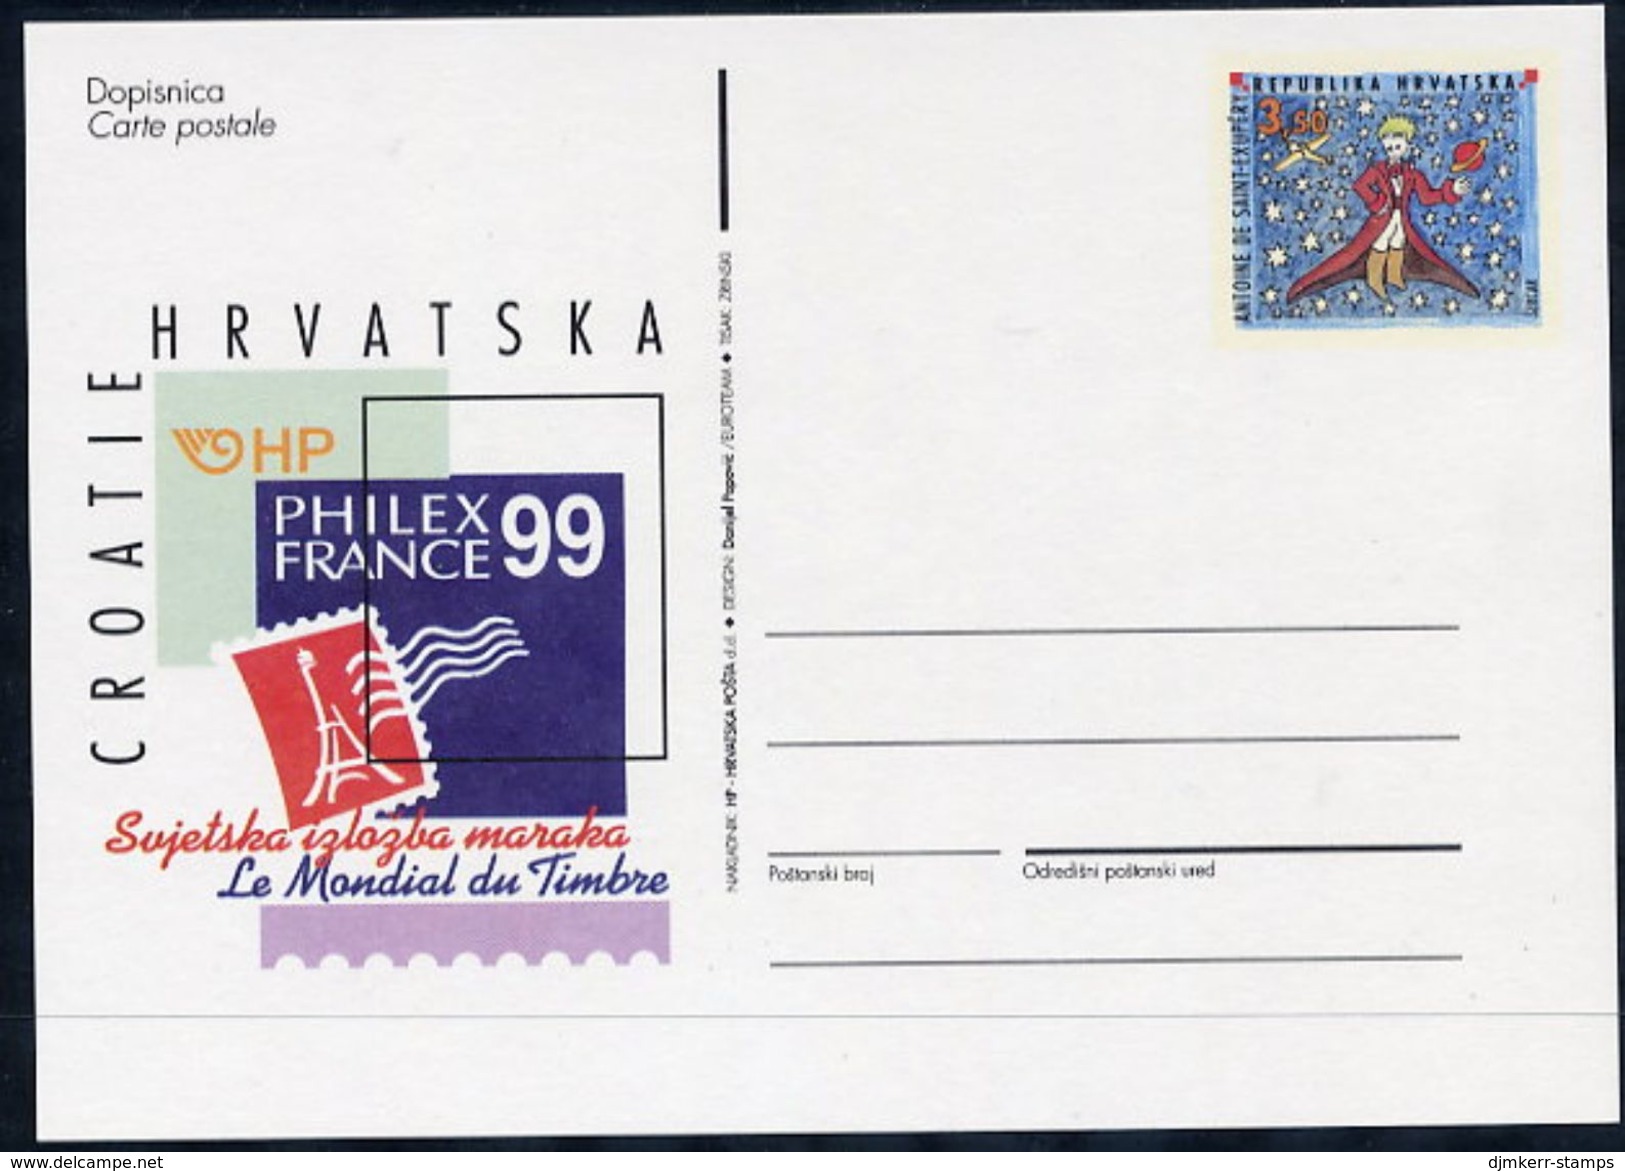 CROATIA  1999 Postal Stationery Card 3.50 K. PHILEXFRANCE 99 Exhibition Unused.  Michel P12 - Croatia